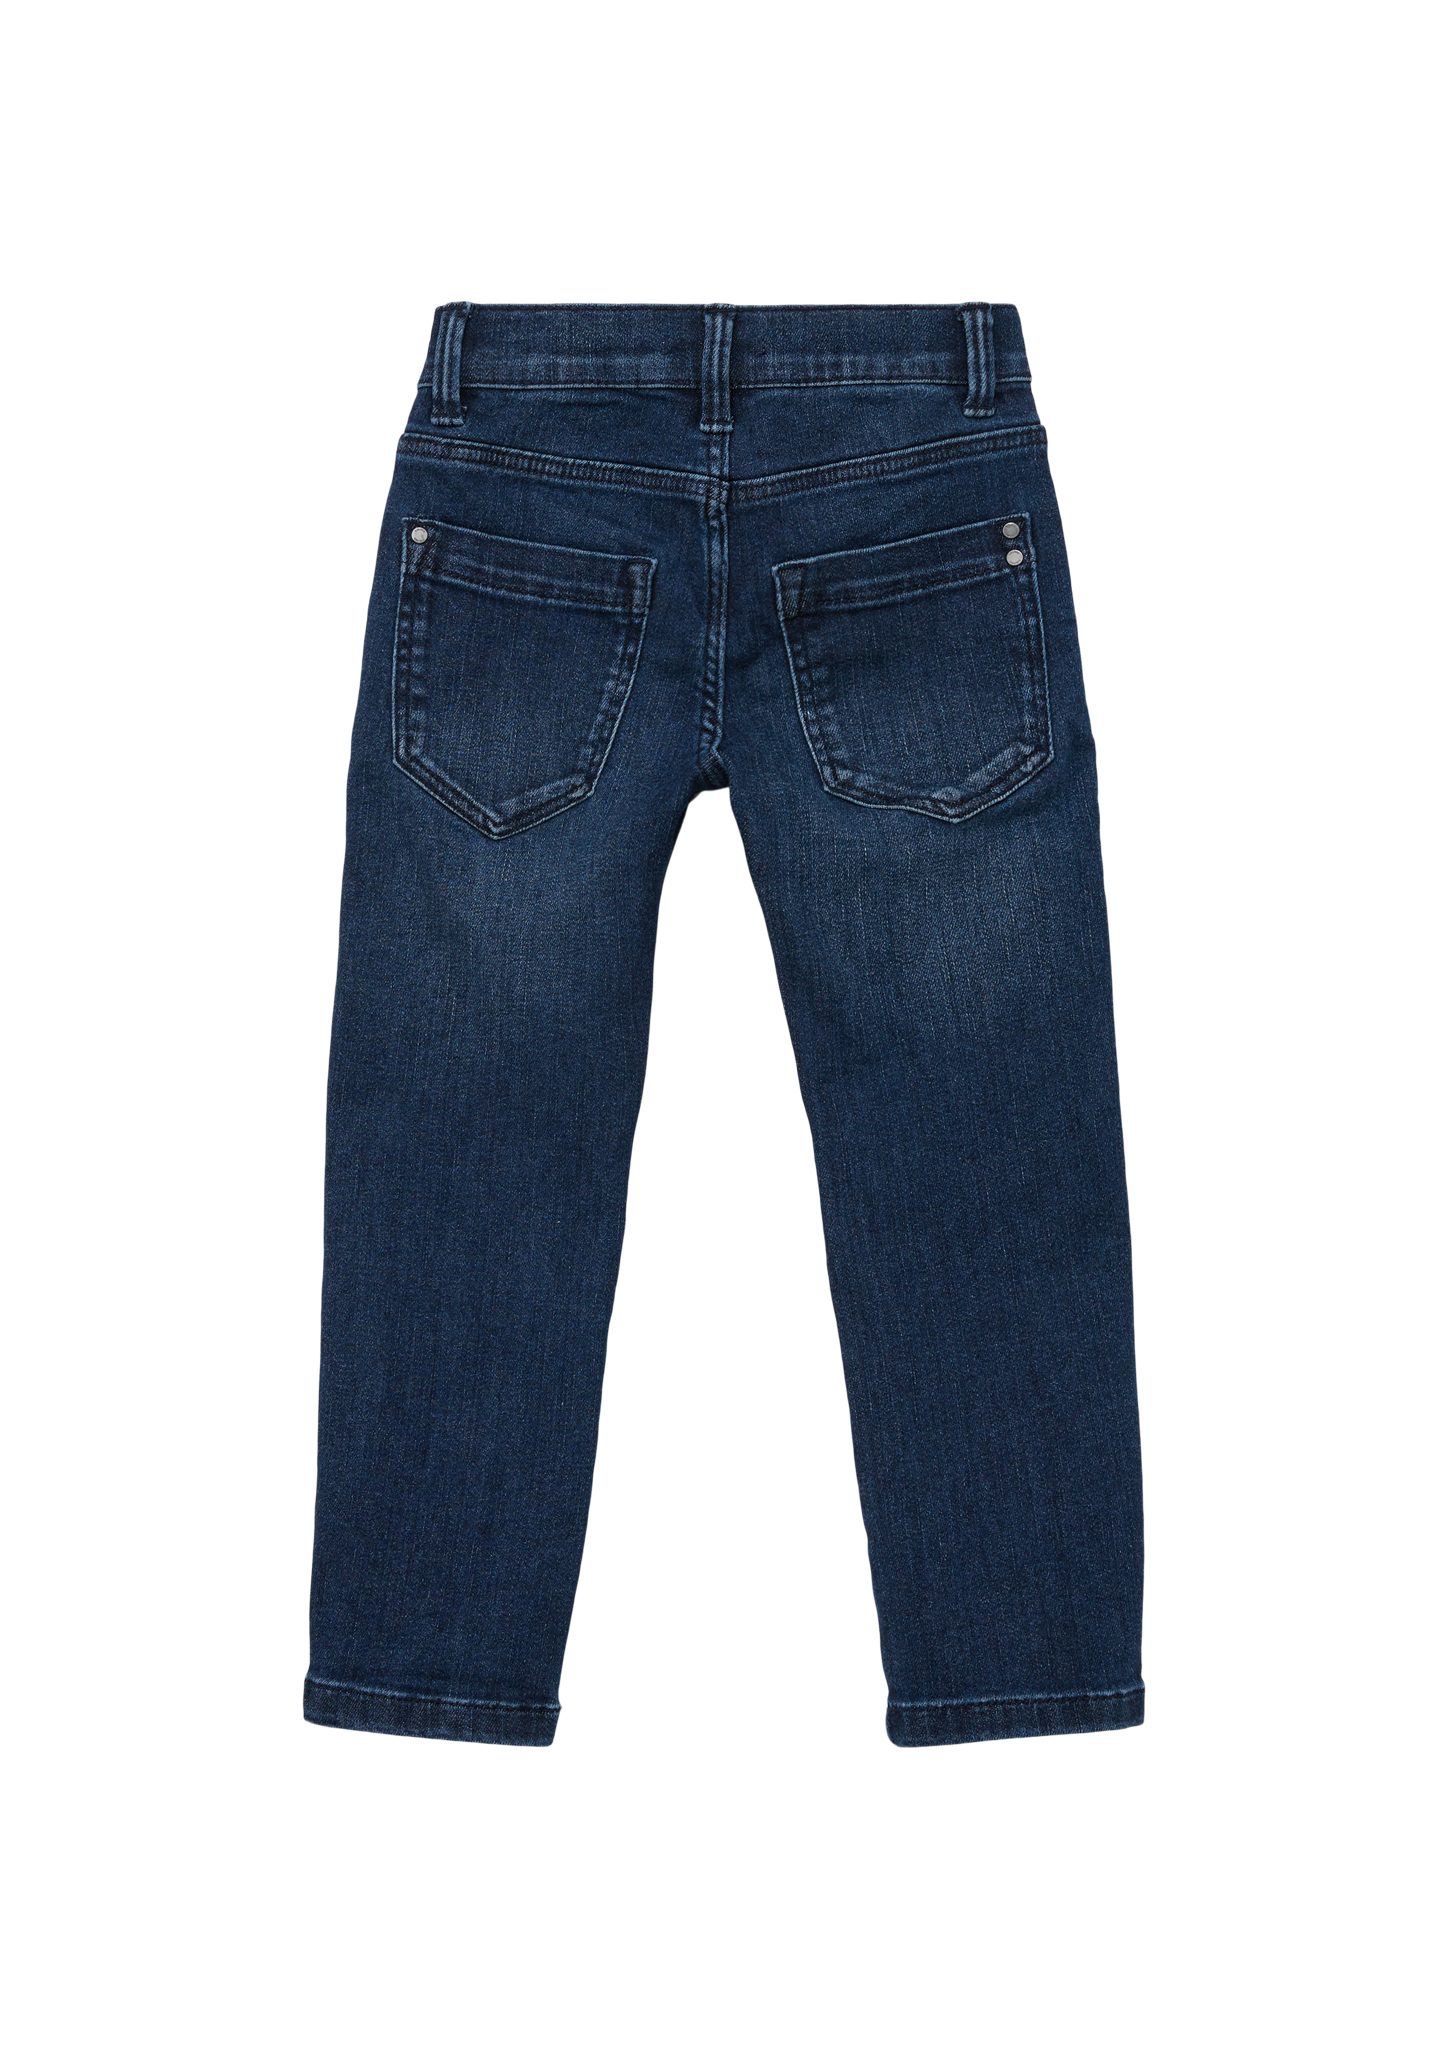 s.Oliver 5-Pocket-Jeans Pelle: verstellbarem Jeans Bund Waschung mit